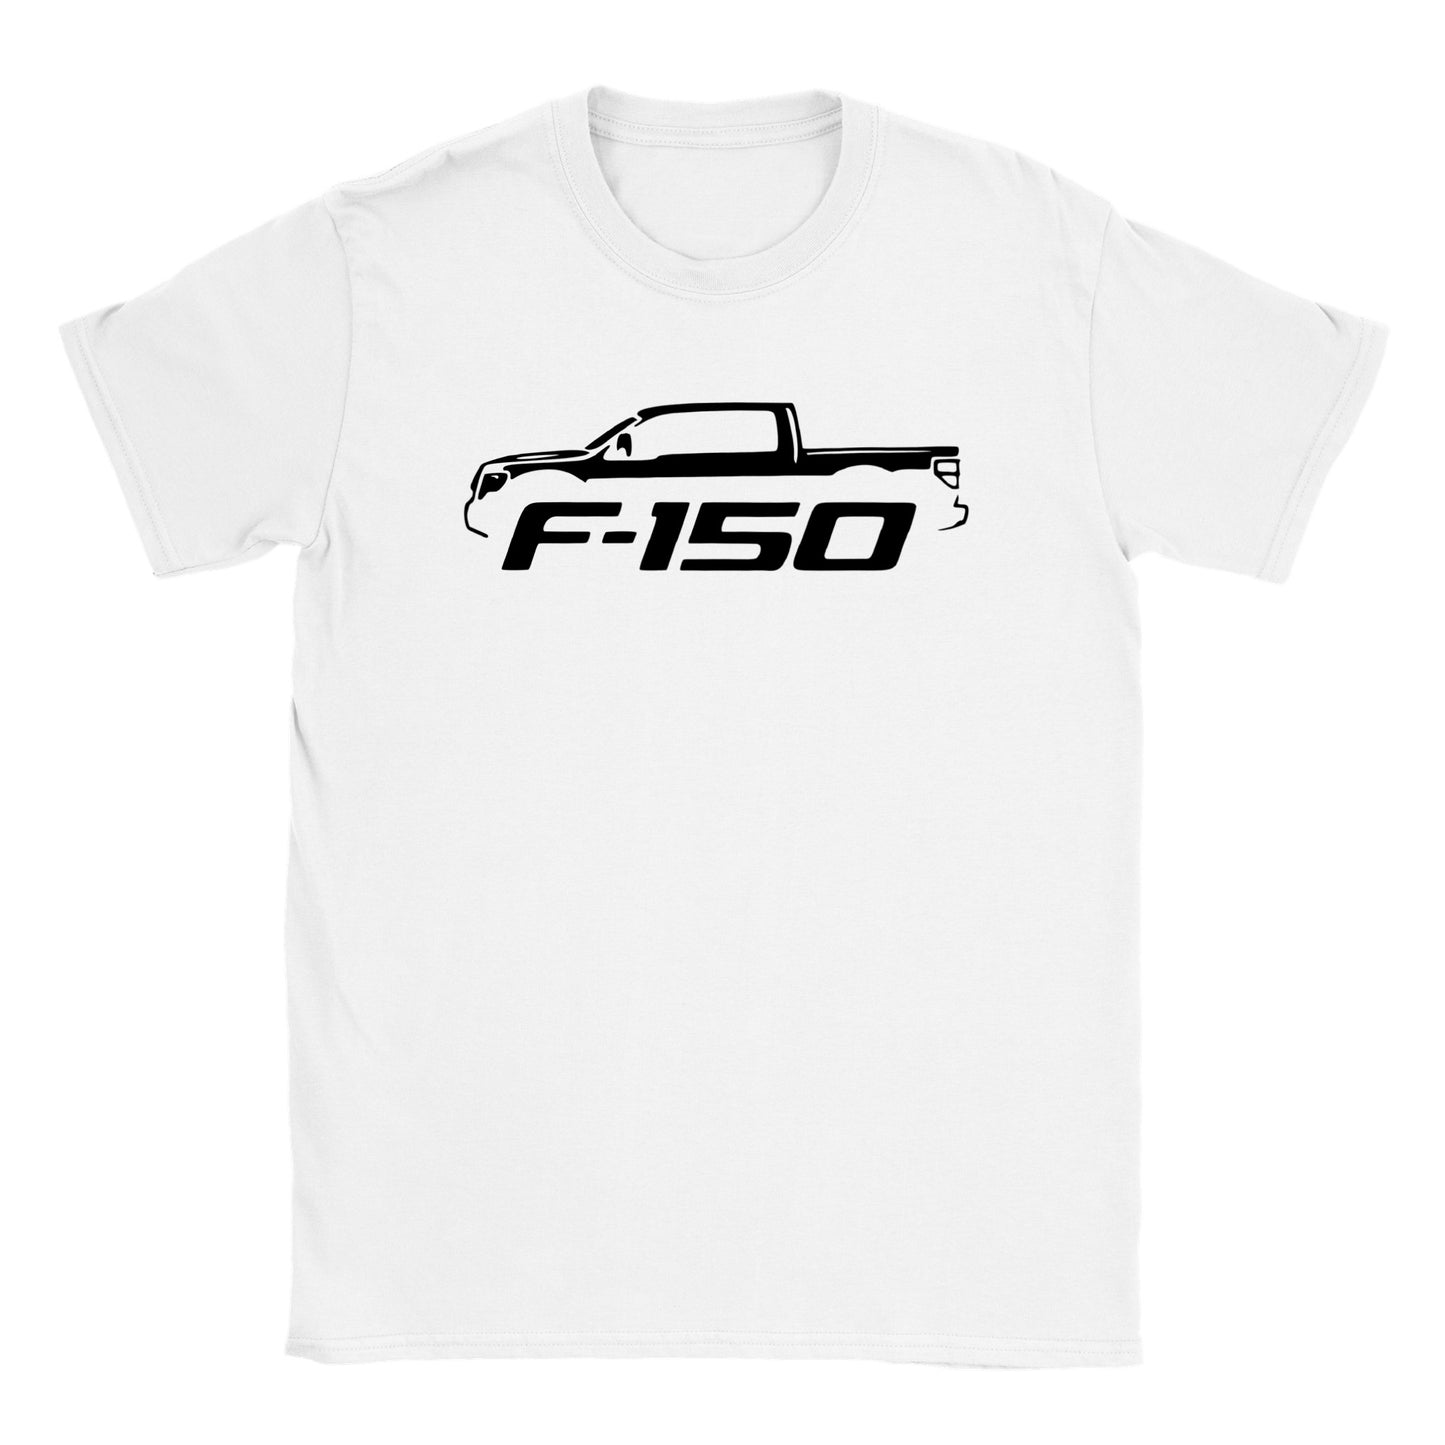 F-150 - Classic Unisex Crewneck T-shirt - Mister Snarky's